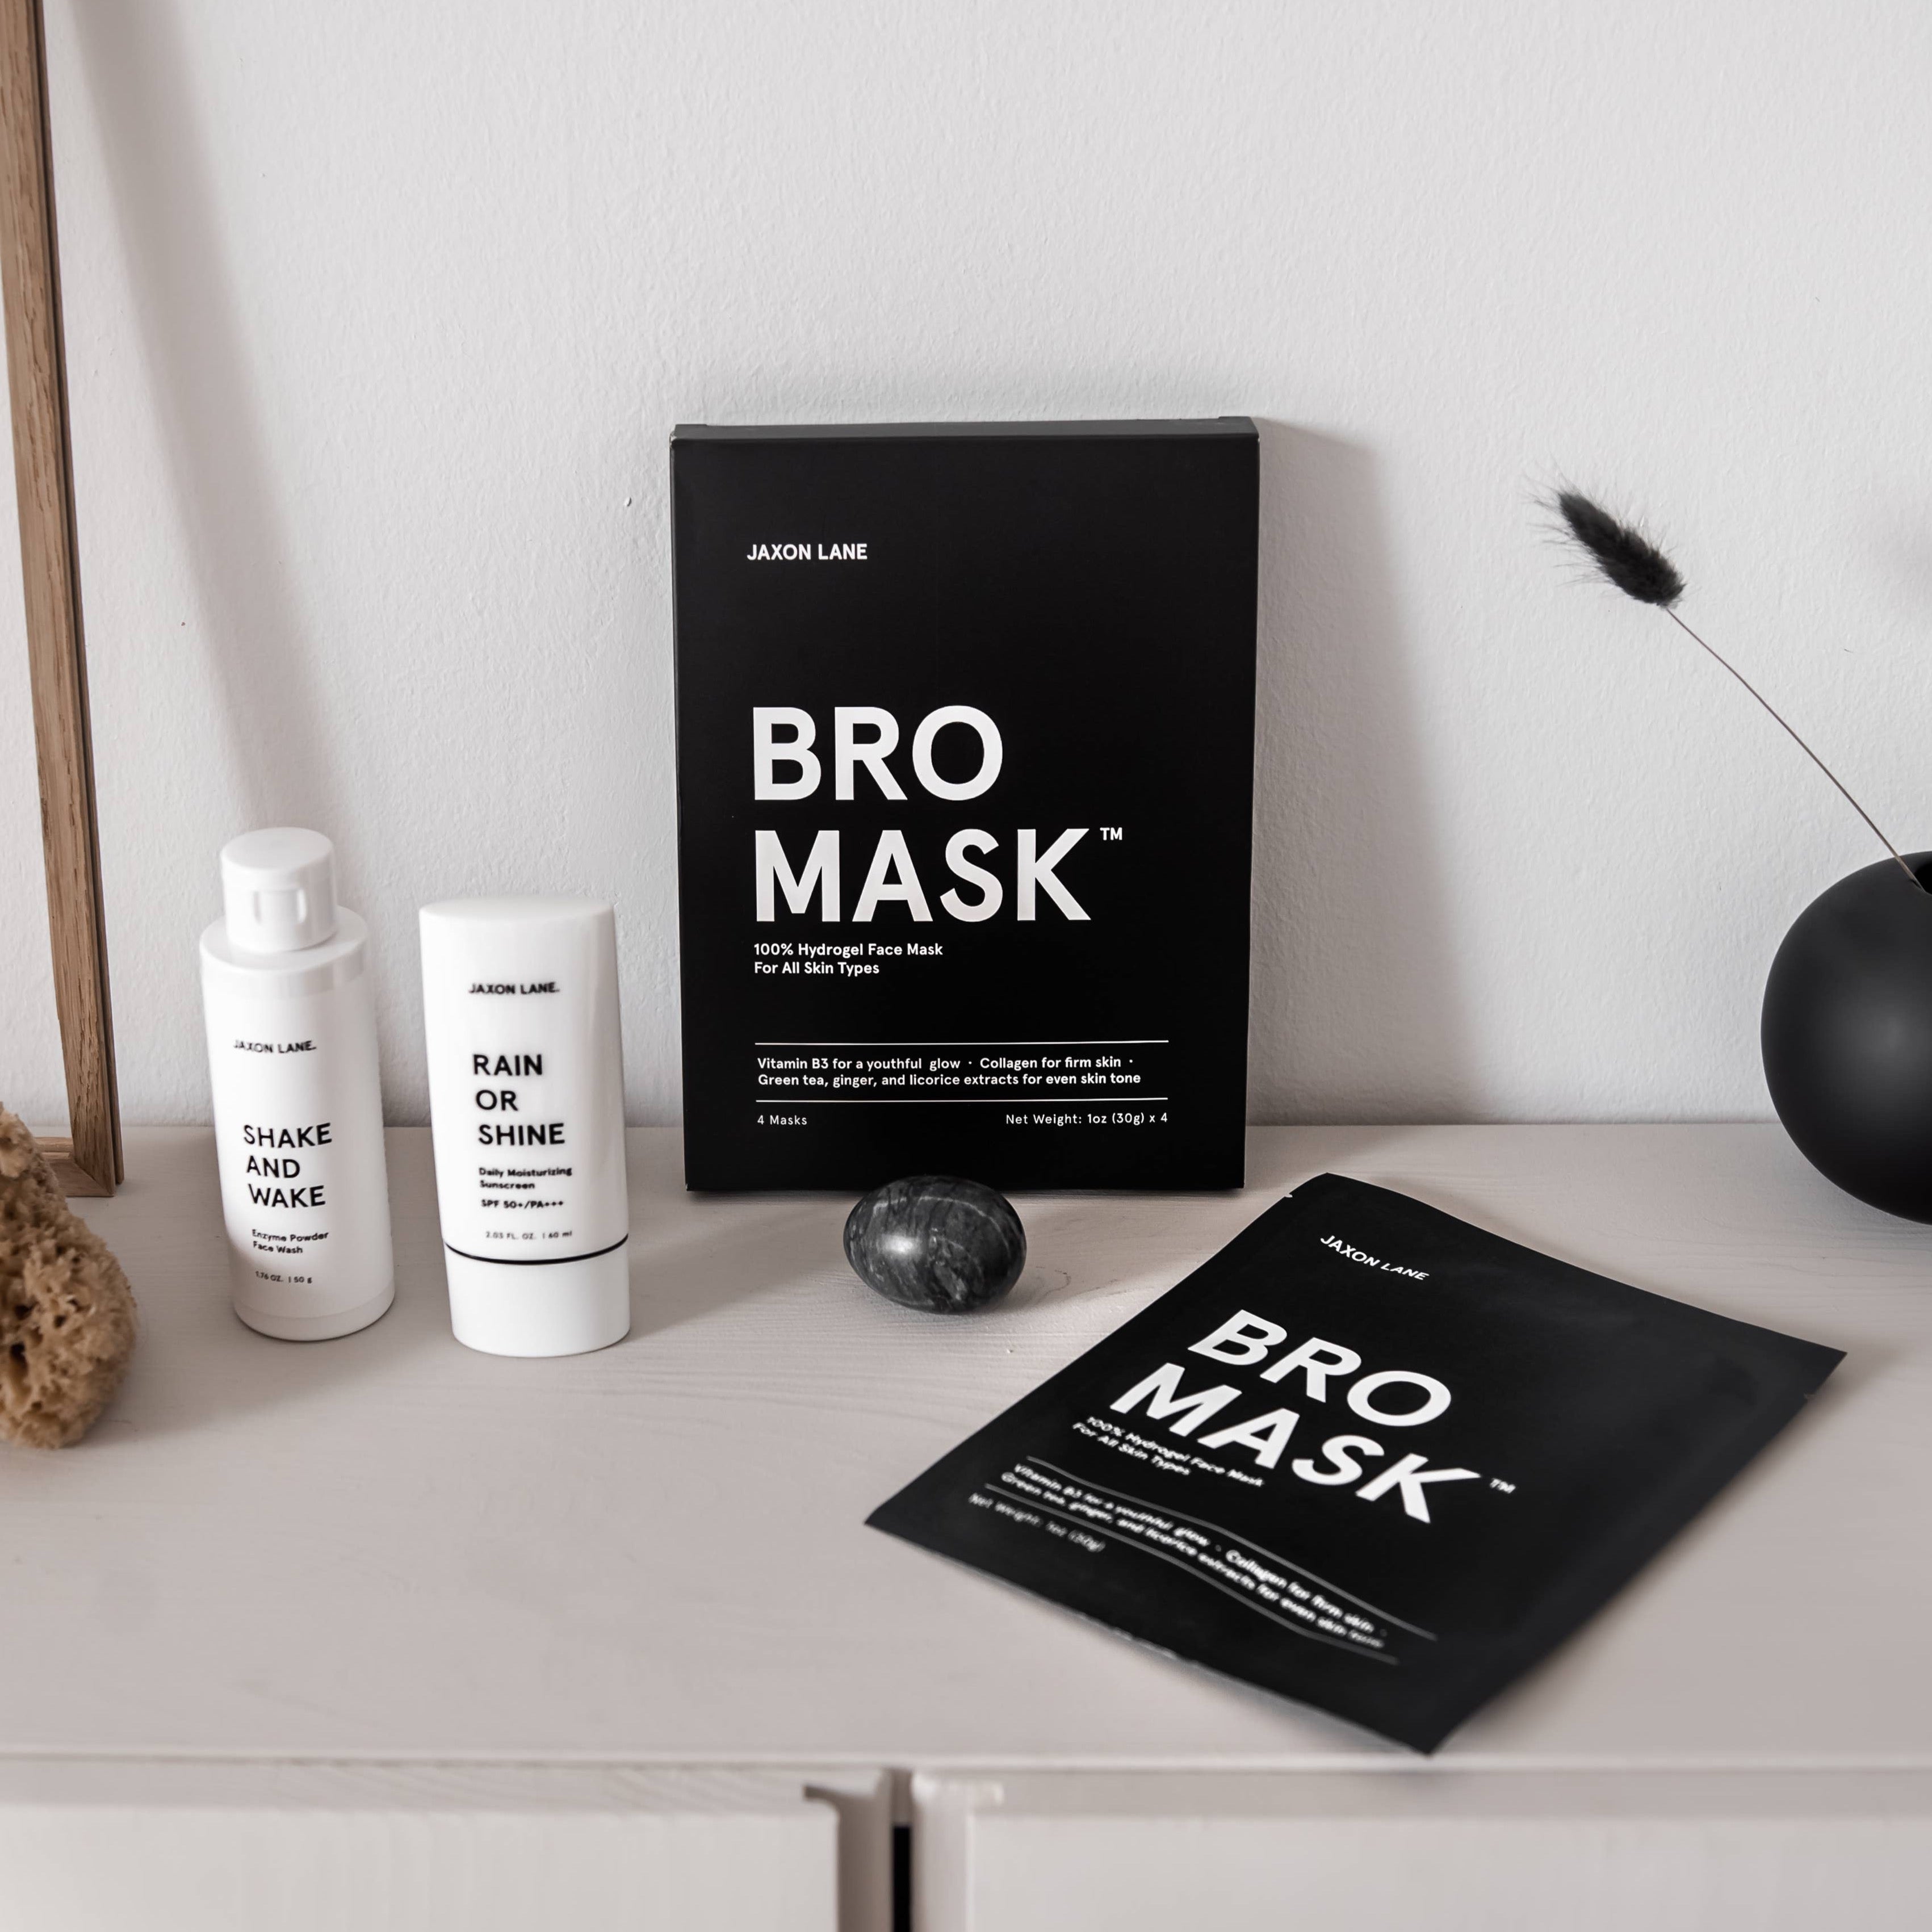 BRO MASK Hydrogel Face Mask (Box of 4) by JAXON LANE